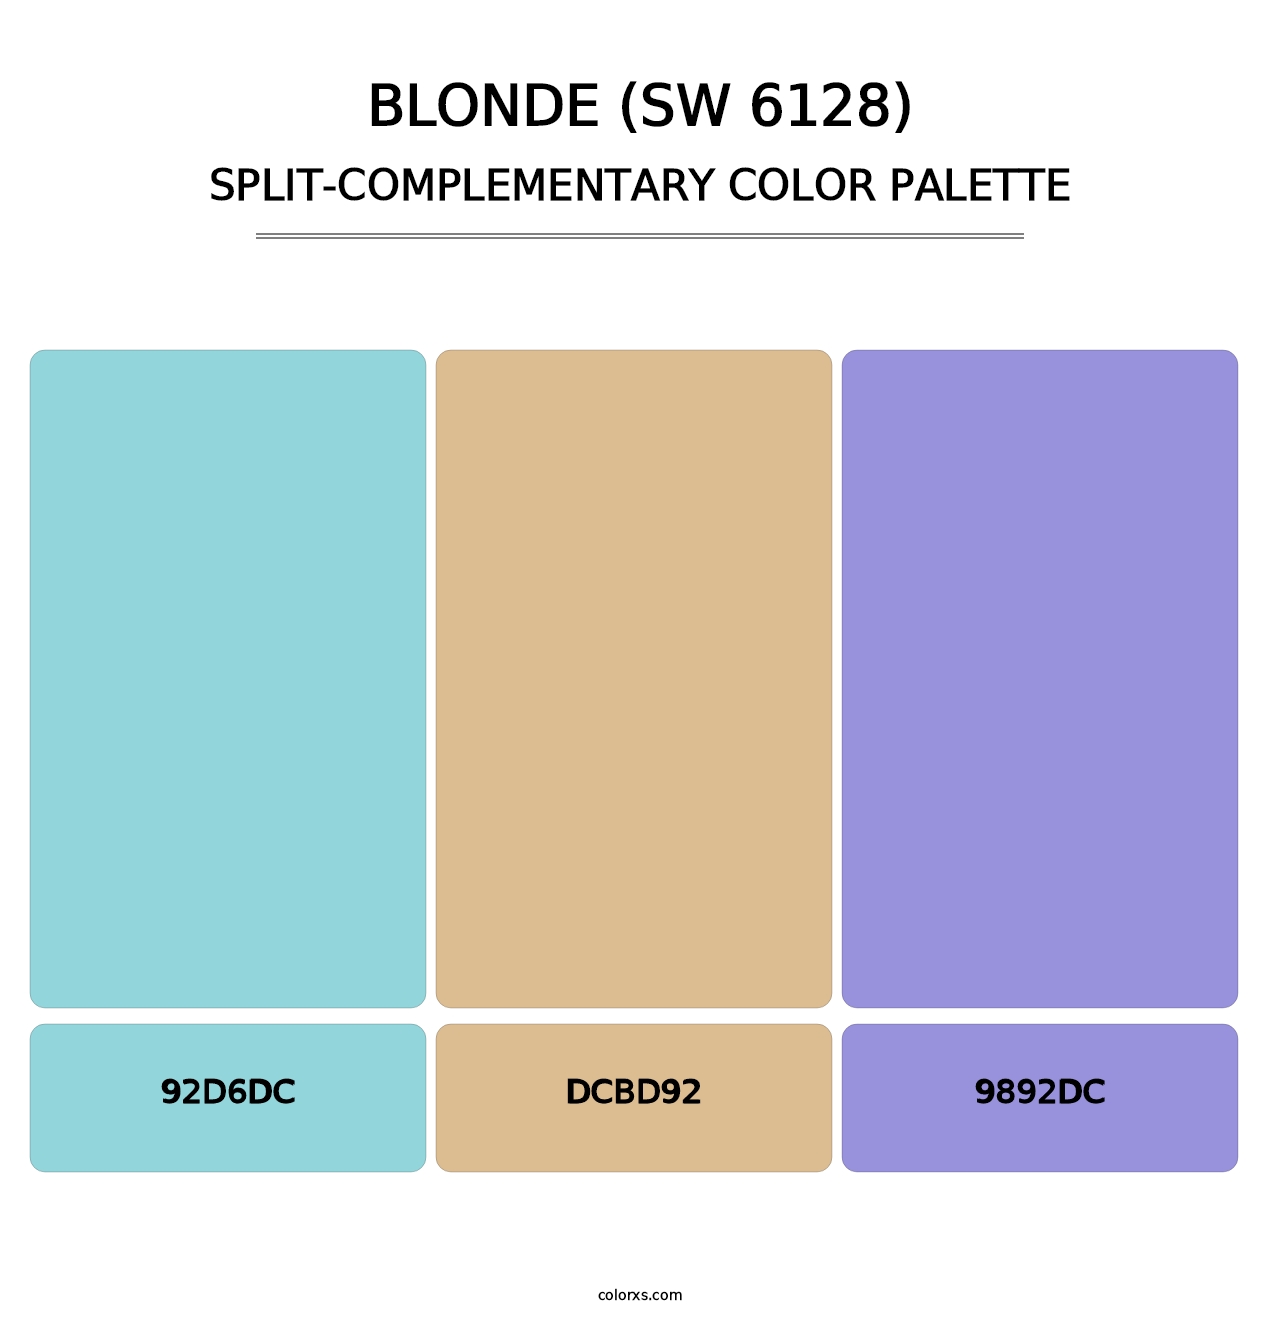 Blonde (SW 6128) - Split-Complementary Color Palette